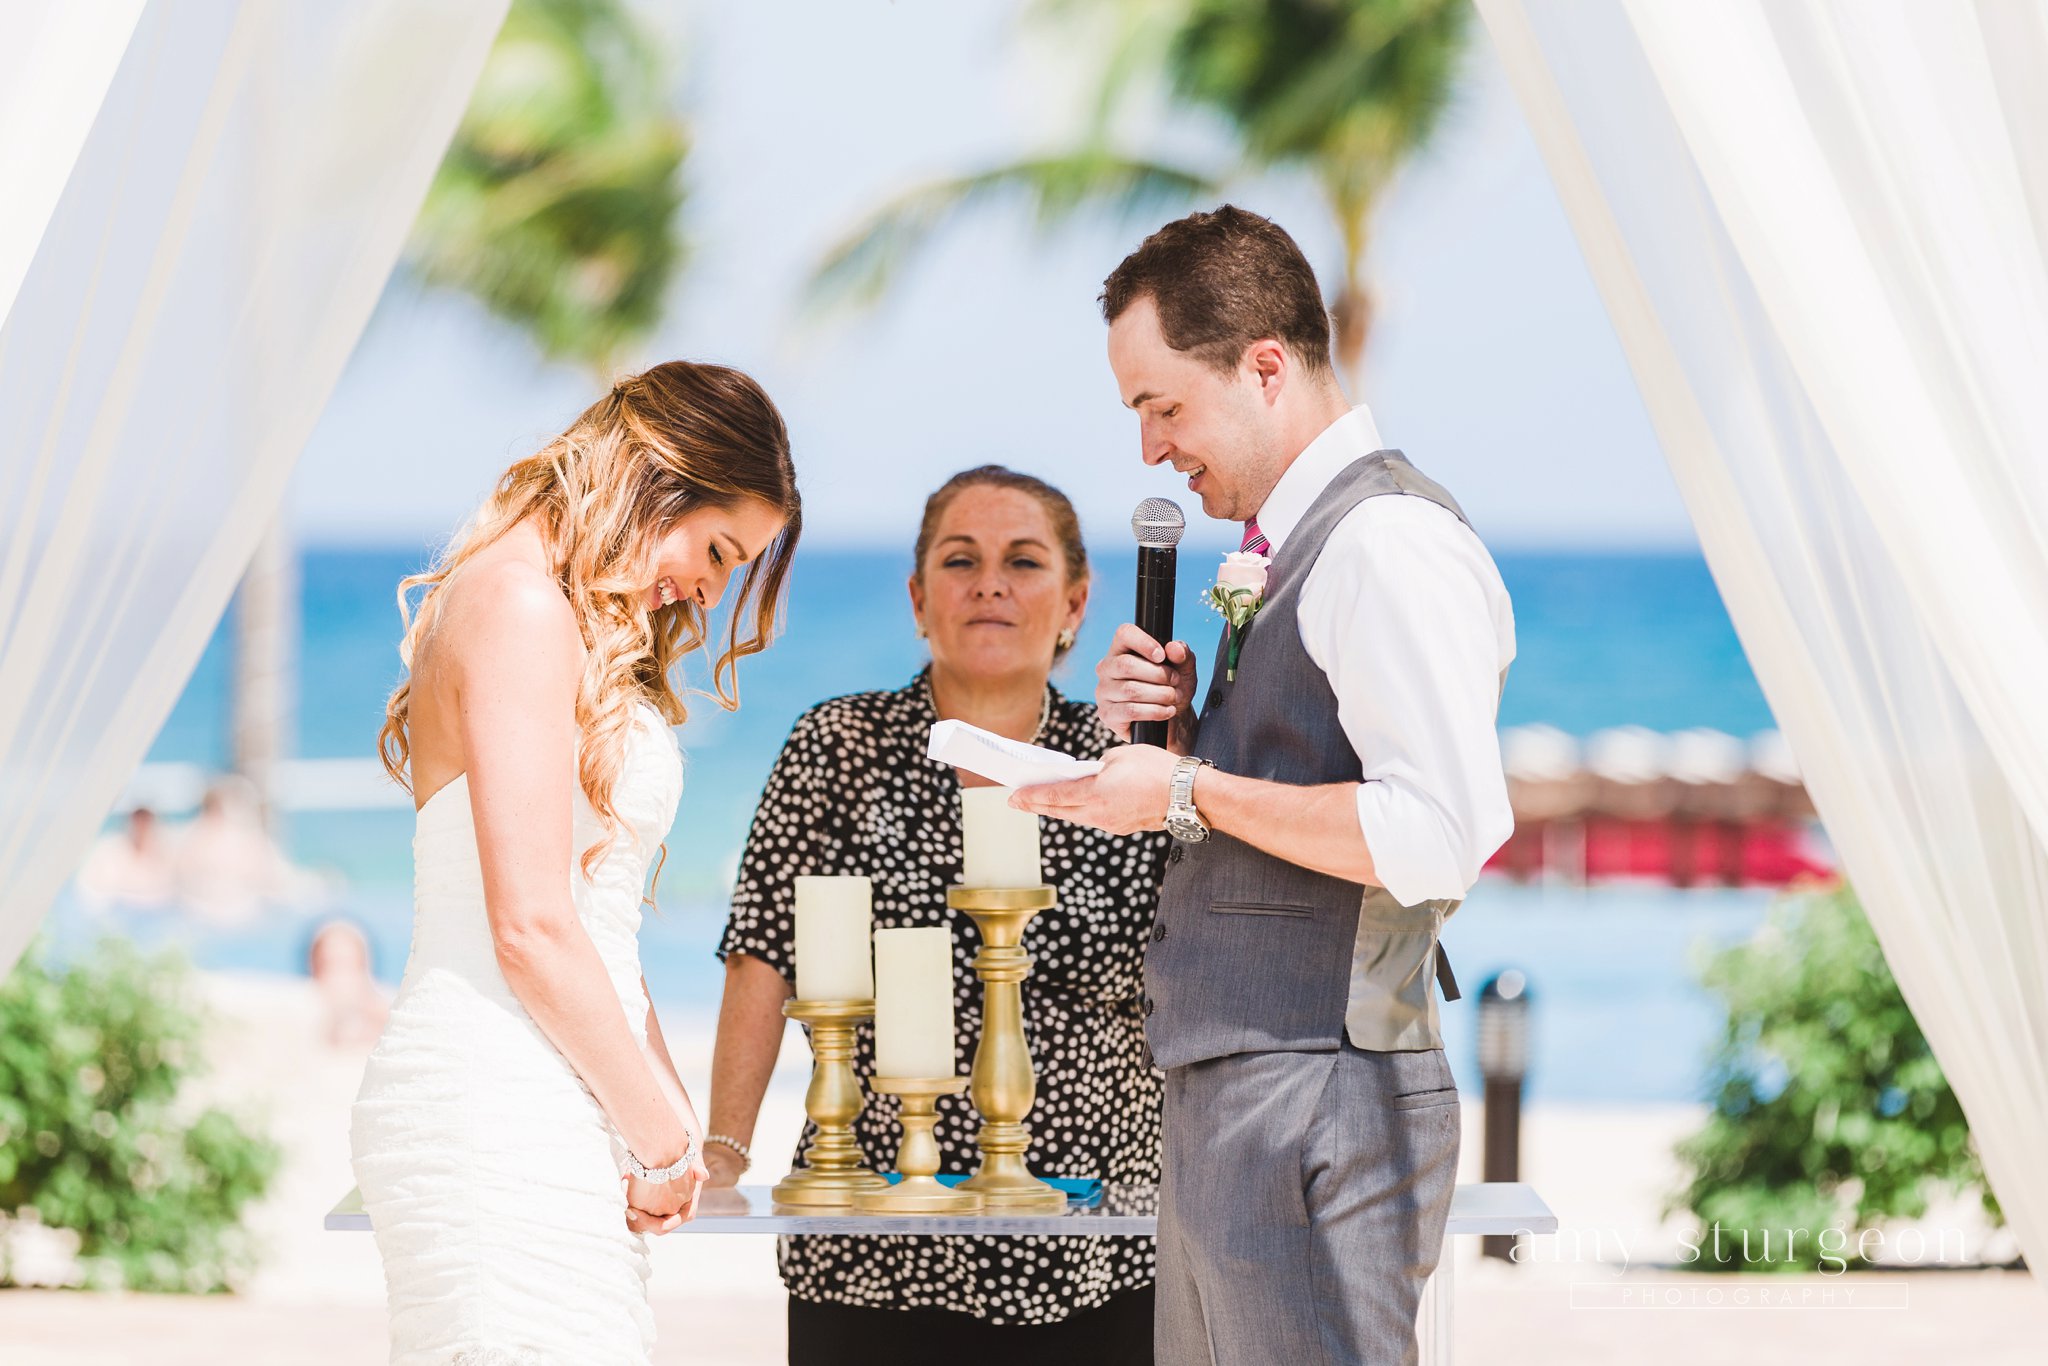 Ceremony decor at the Playa del carmen Mexico destination wedding